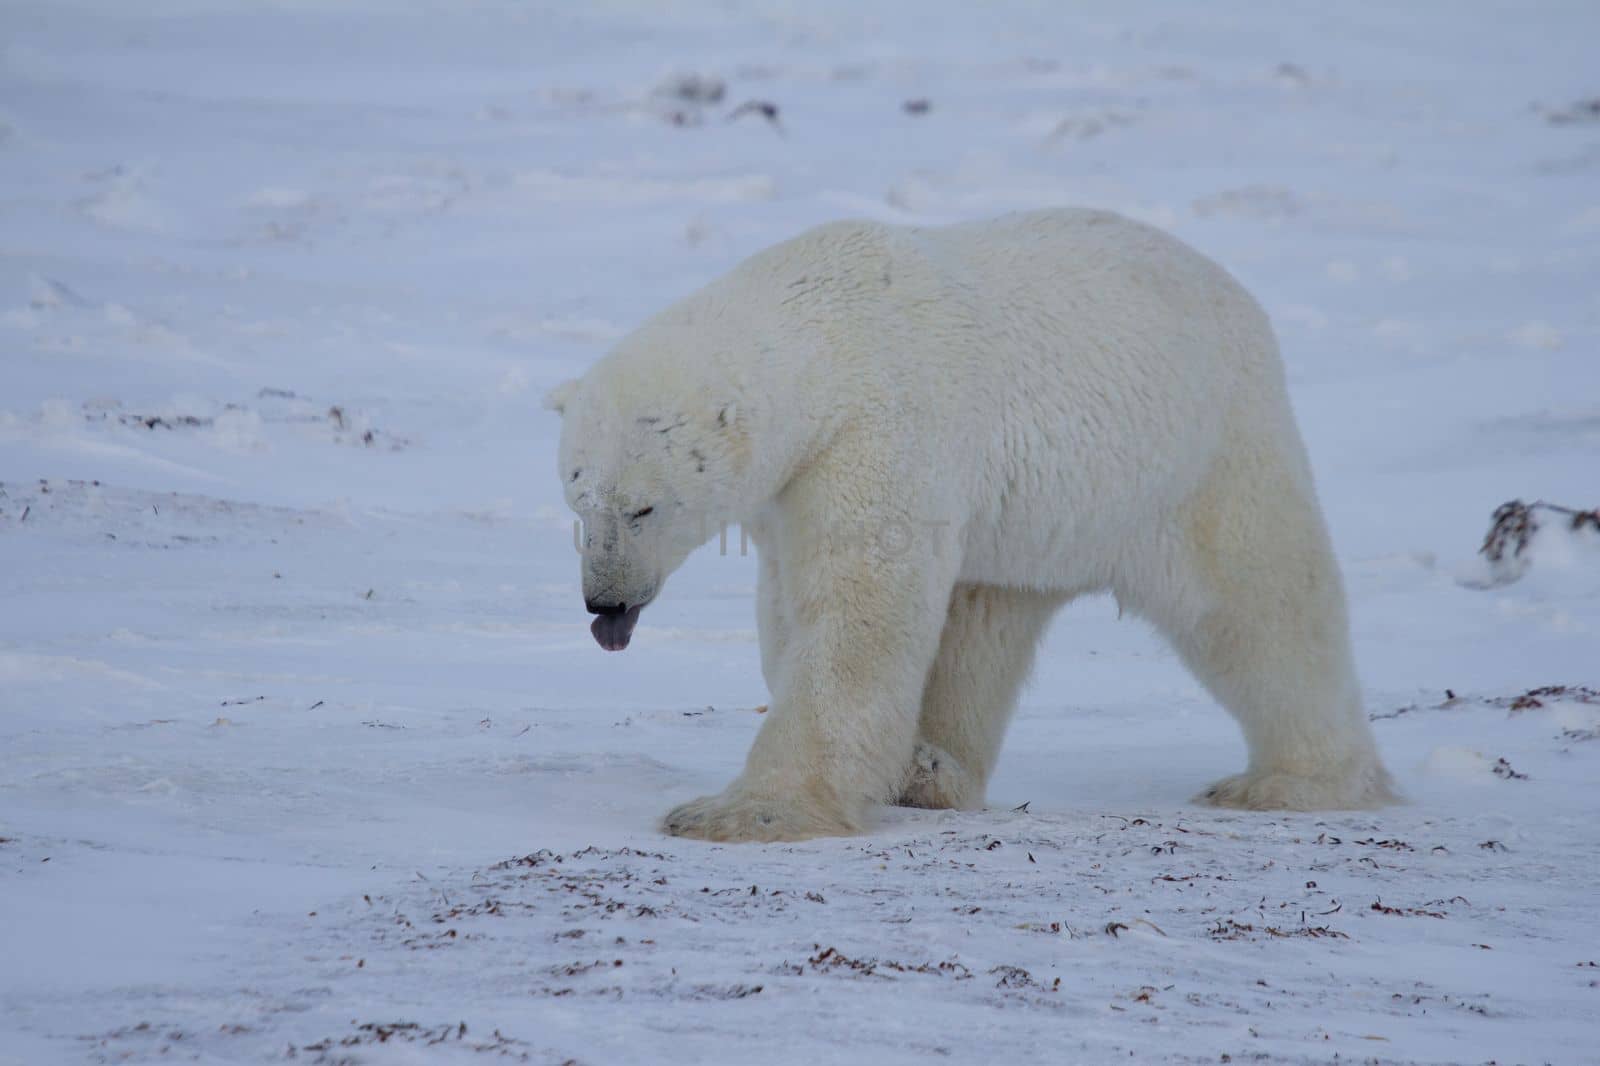 A polar bear, Ursus maritumis, sticking out its tongue while walking on snow among rocks, near Hudson Bay, Churchill, Manitoba, Canada